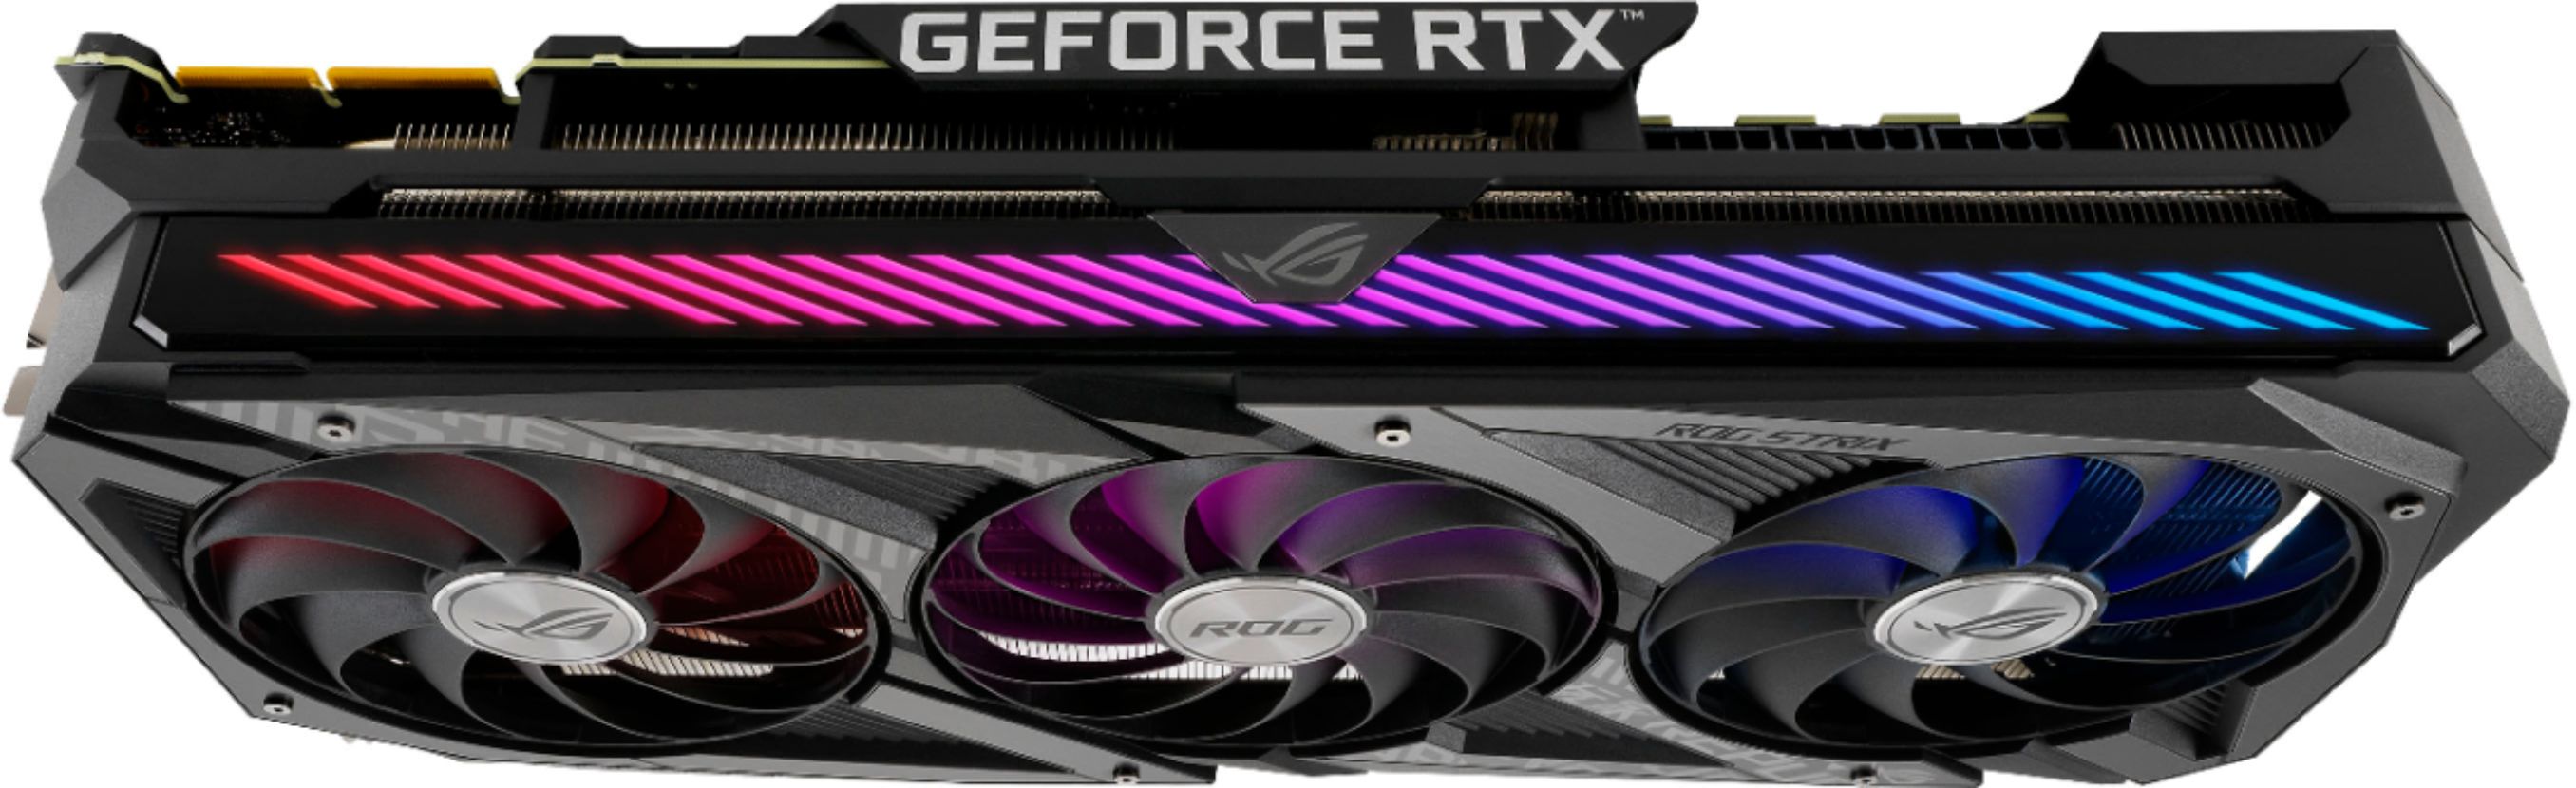 Best Buy: ASUS NVIDIA GeForce RTX 3090 24GB GDDR6X PCI Express 4.0